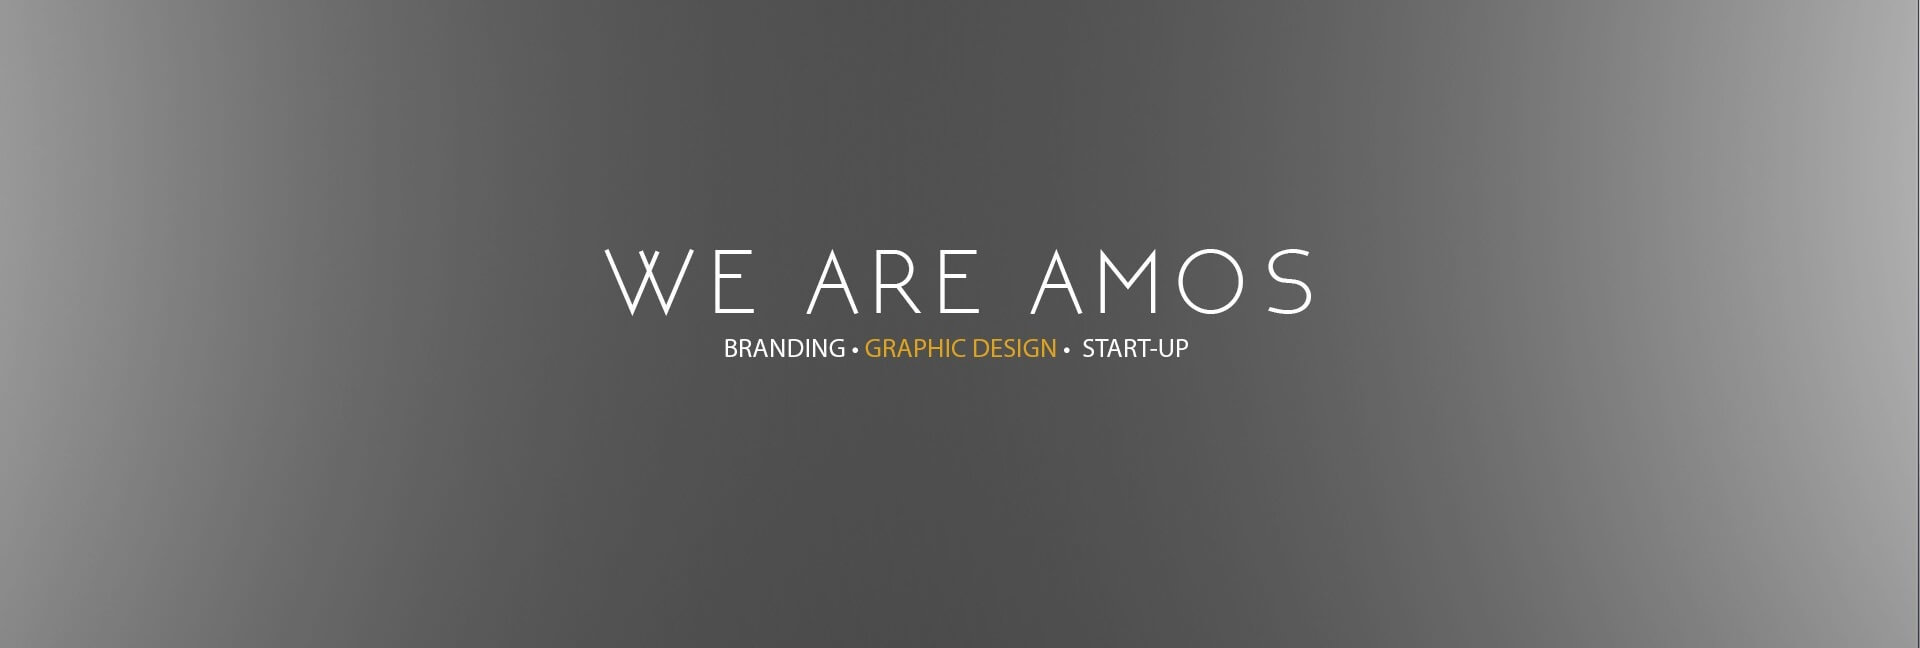 شرکت طراحی گرافیک آموس